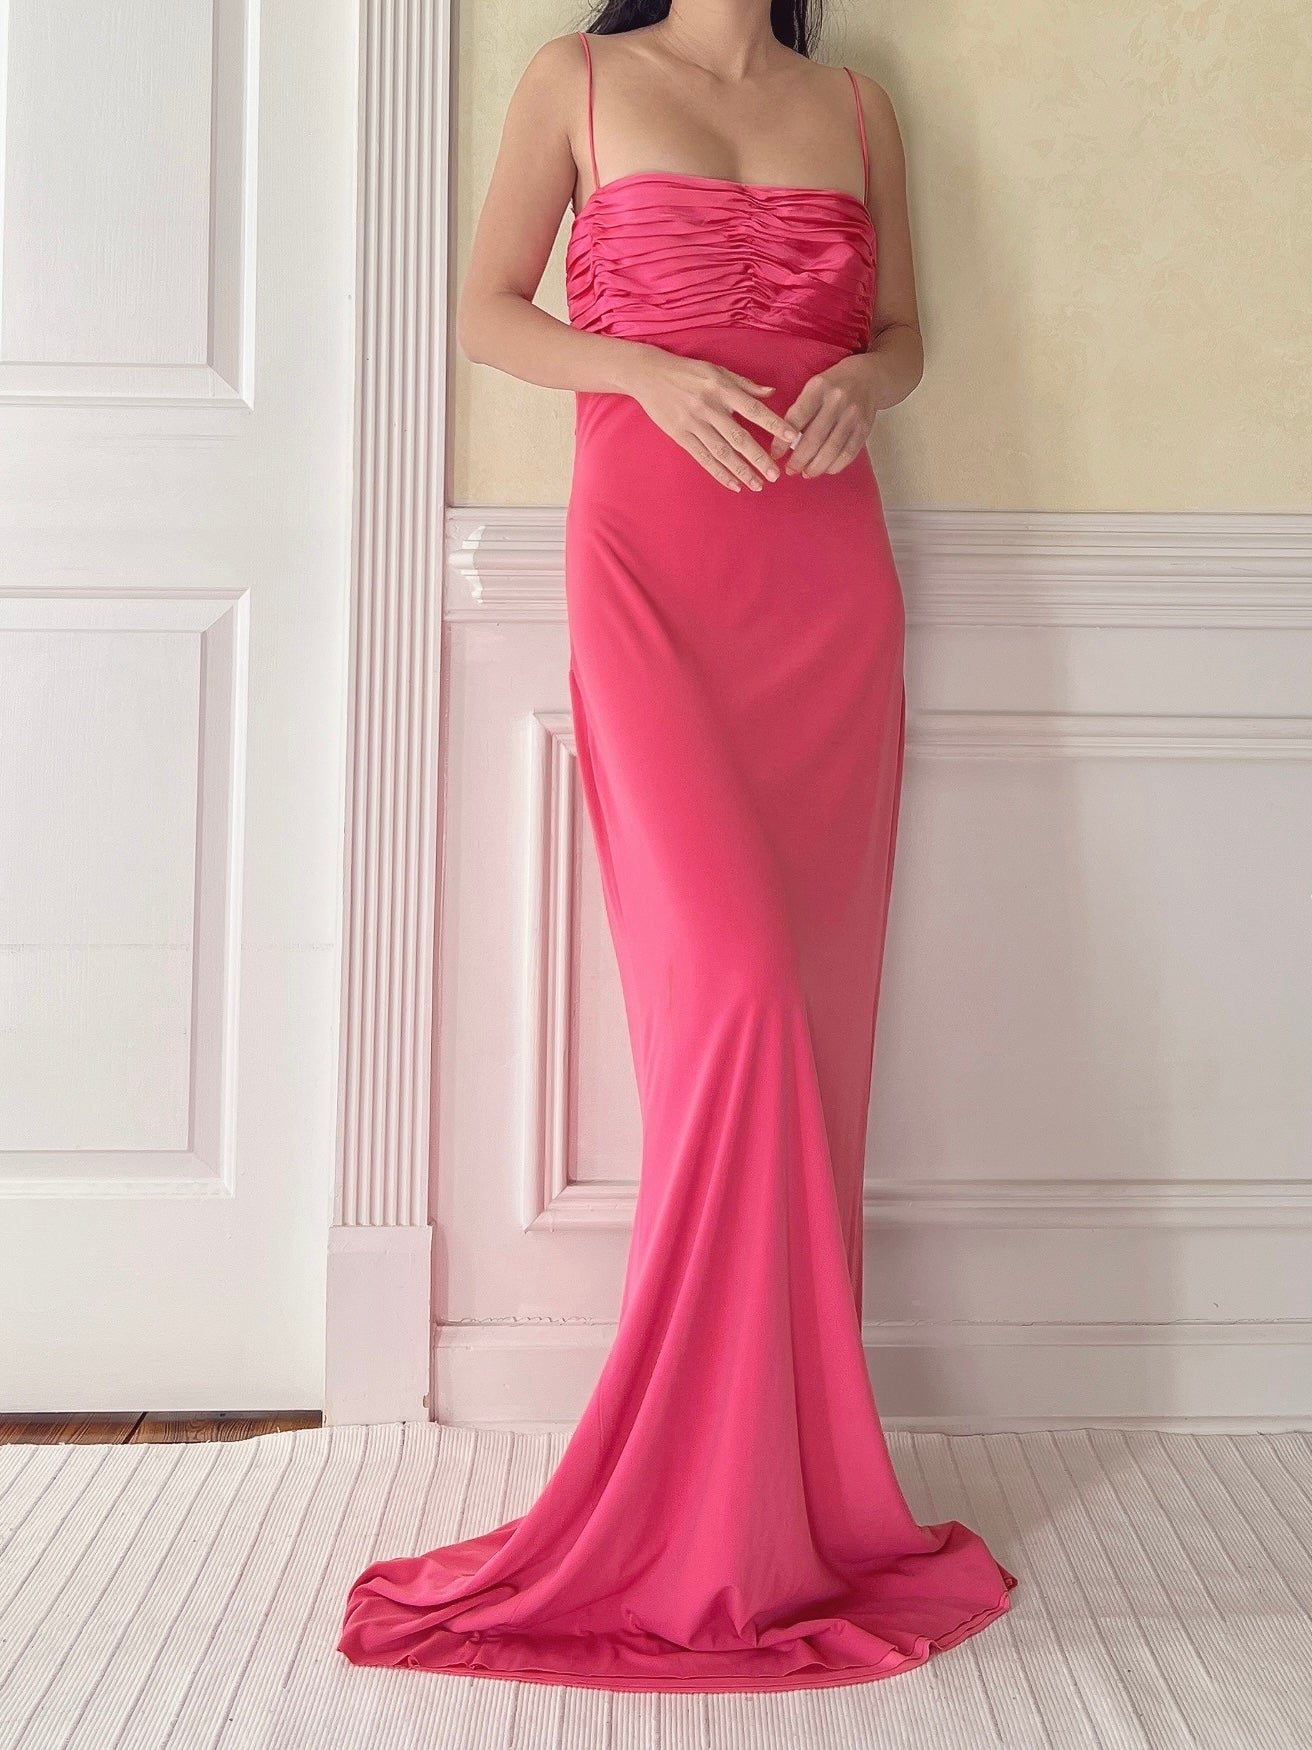 Vintage Hot Pink Jersey Dress - M